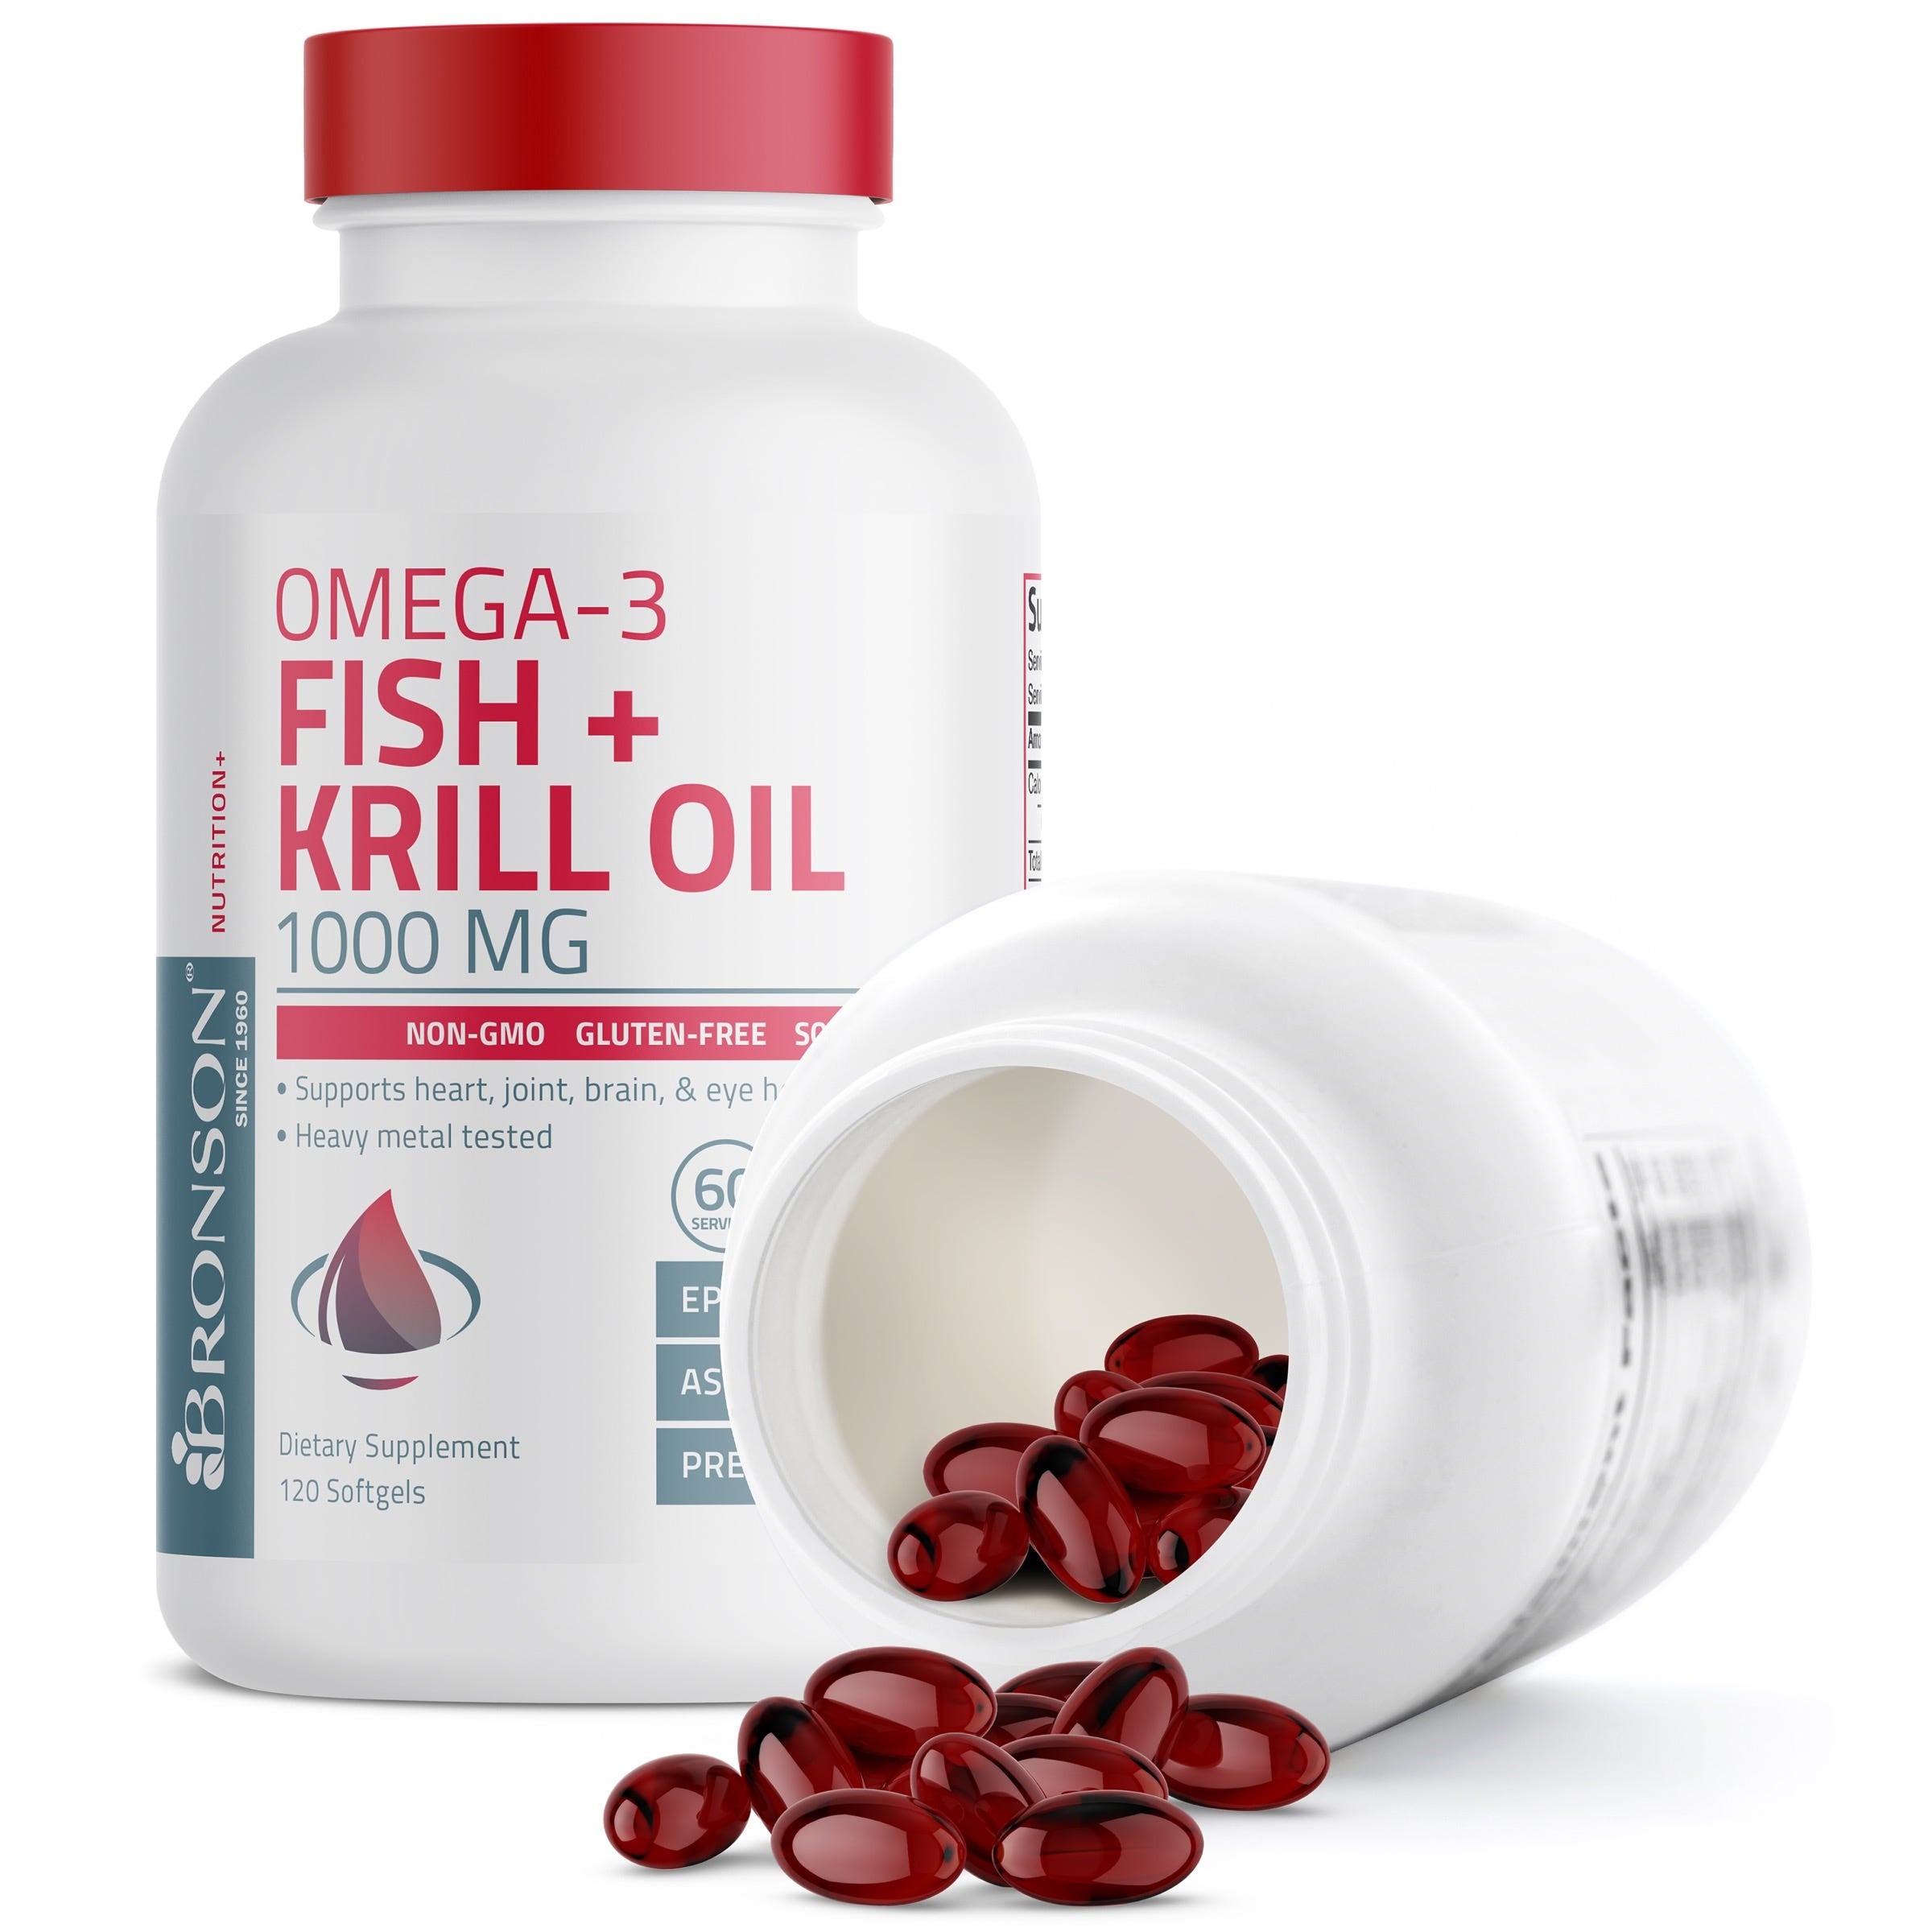 Omega-3 Fish + Krill Oil 1000 MG 120 Softgels view 6 of 7